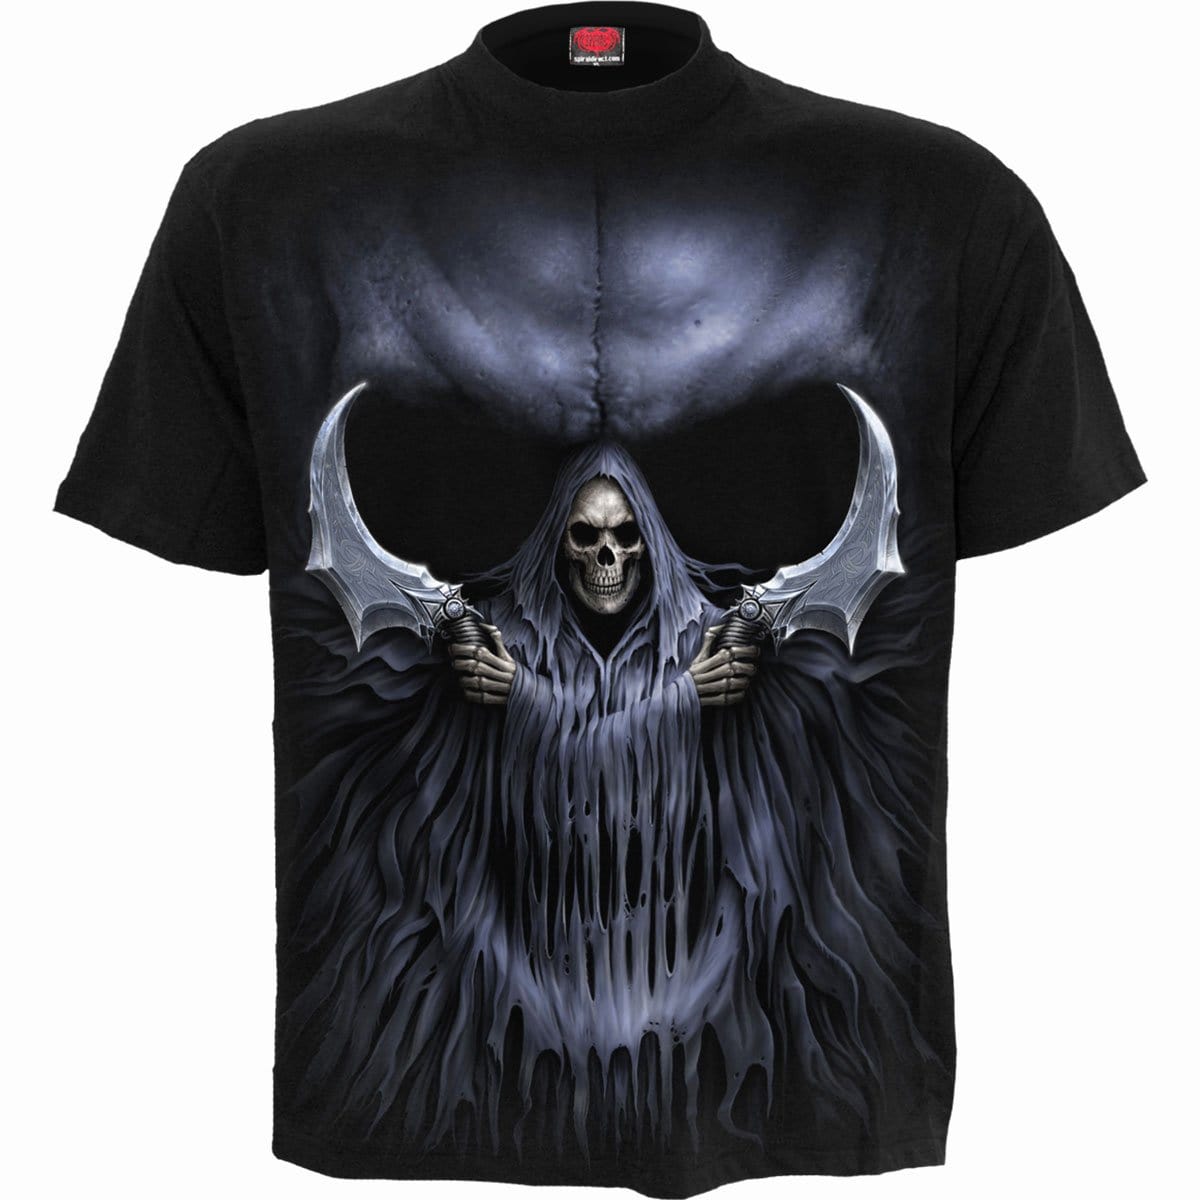 DOUBLE DEATH - T-Shirt Black - Spiral USA